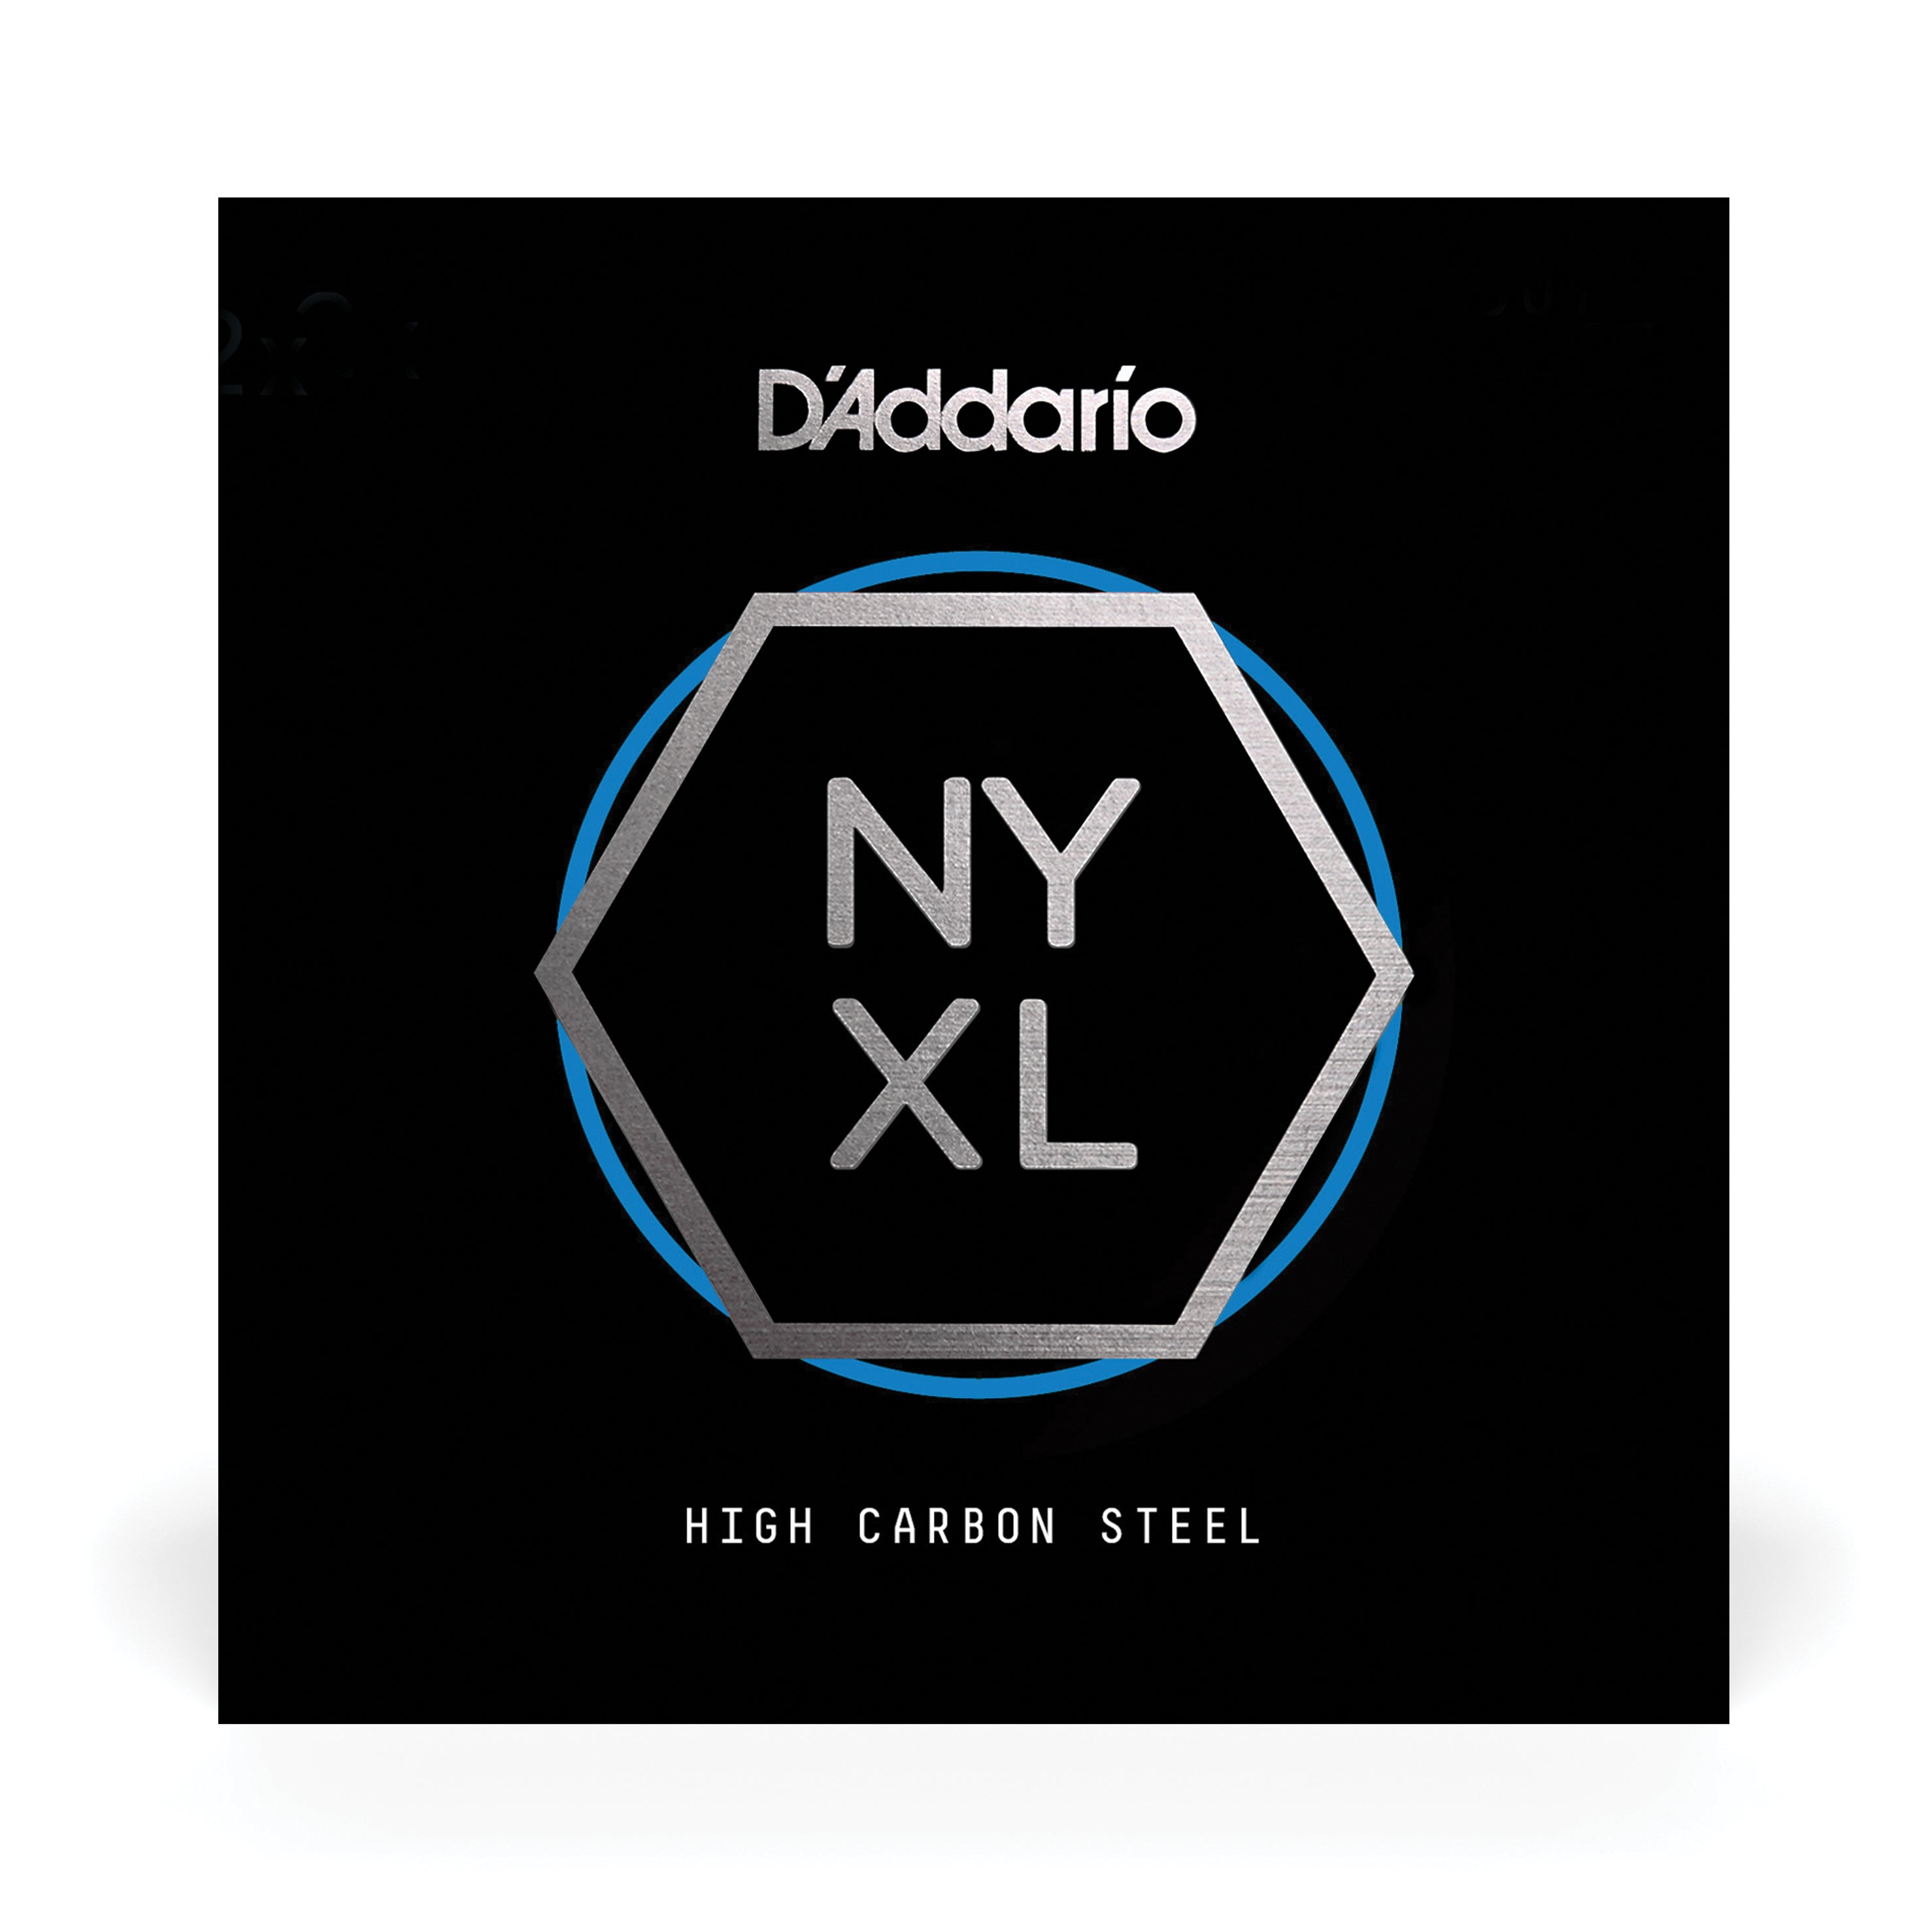 D'Addario NYXL High Carbon Steel .019 Single Guitar String